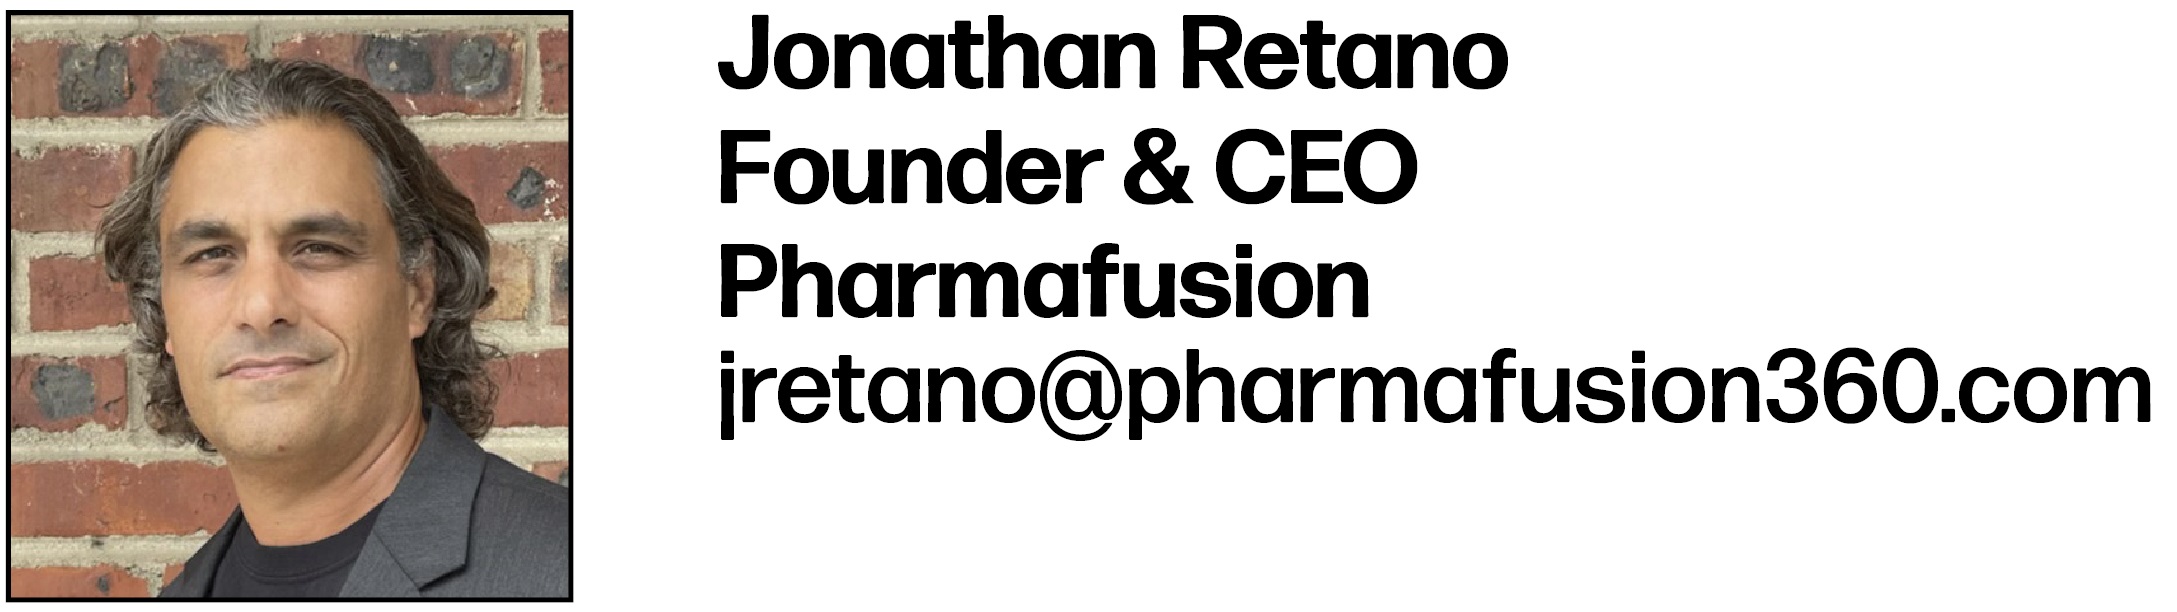 Jonathan Retano Founder & CEO Pharmafusion jretano@pharmafusion360.com